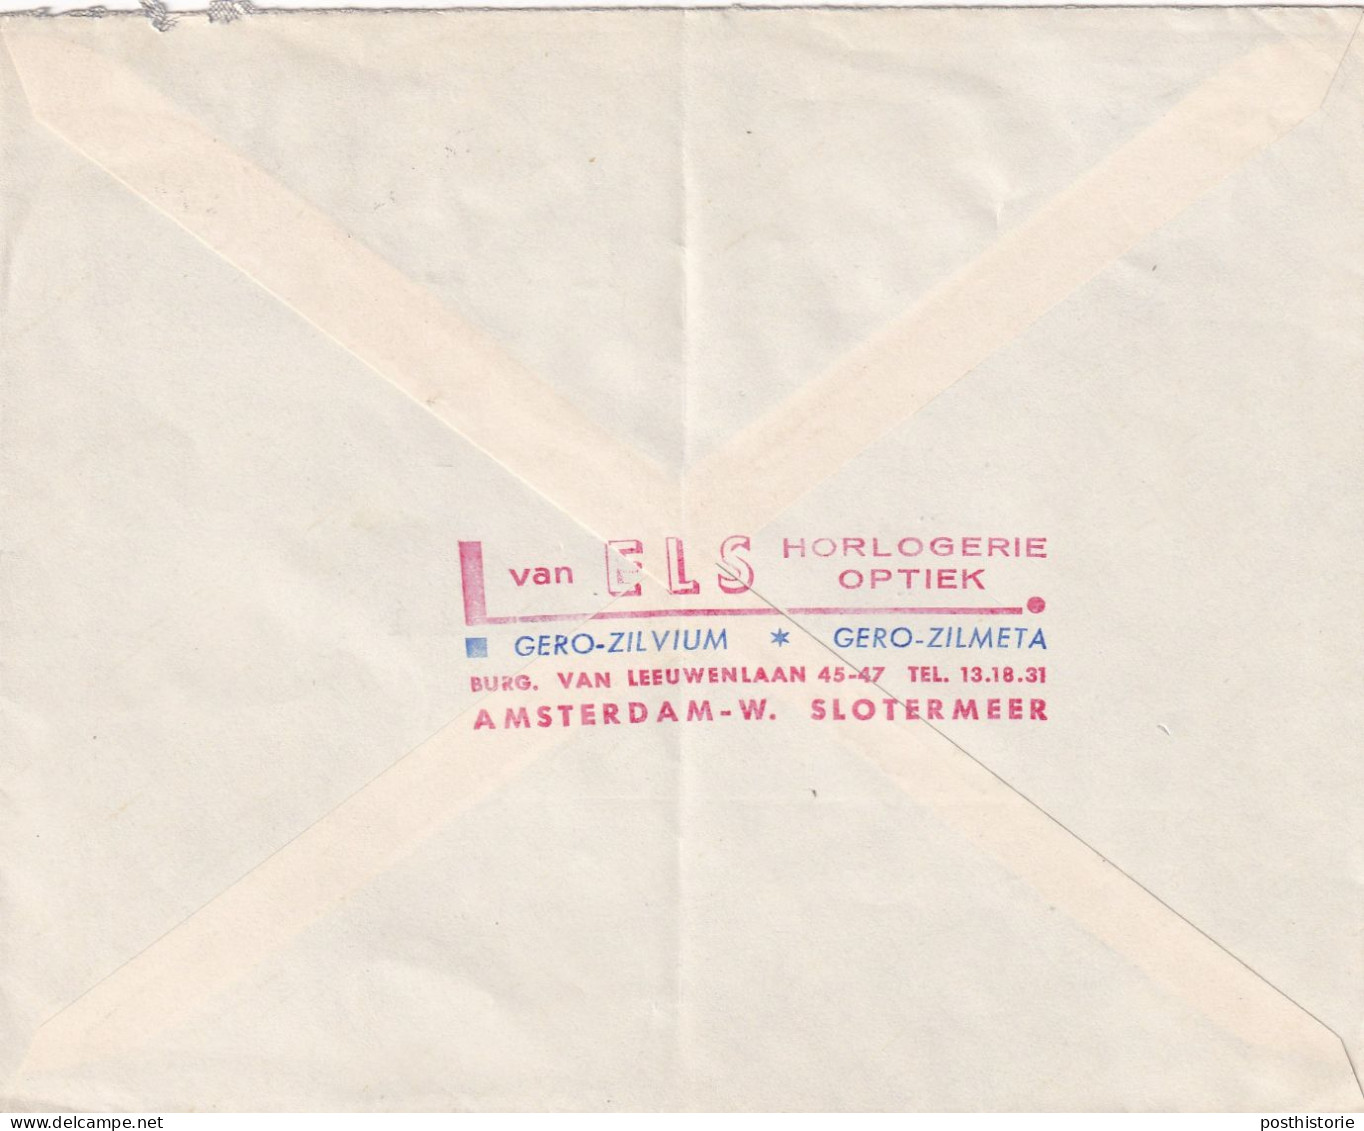 Envelop Met 30 Cent Zomerzegel 1961   Kievit - Storia Postale